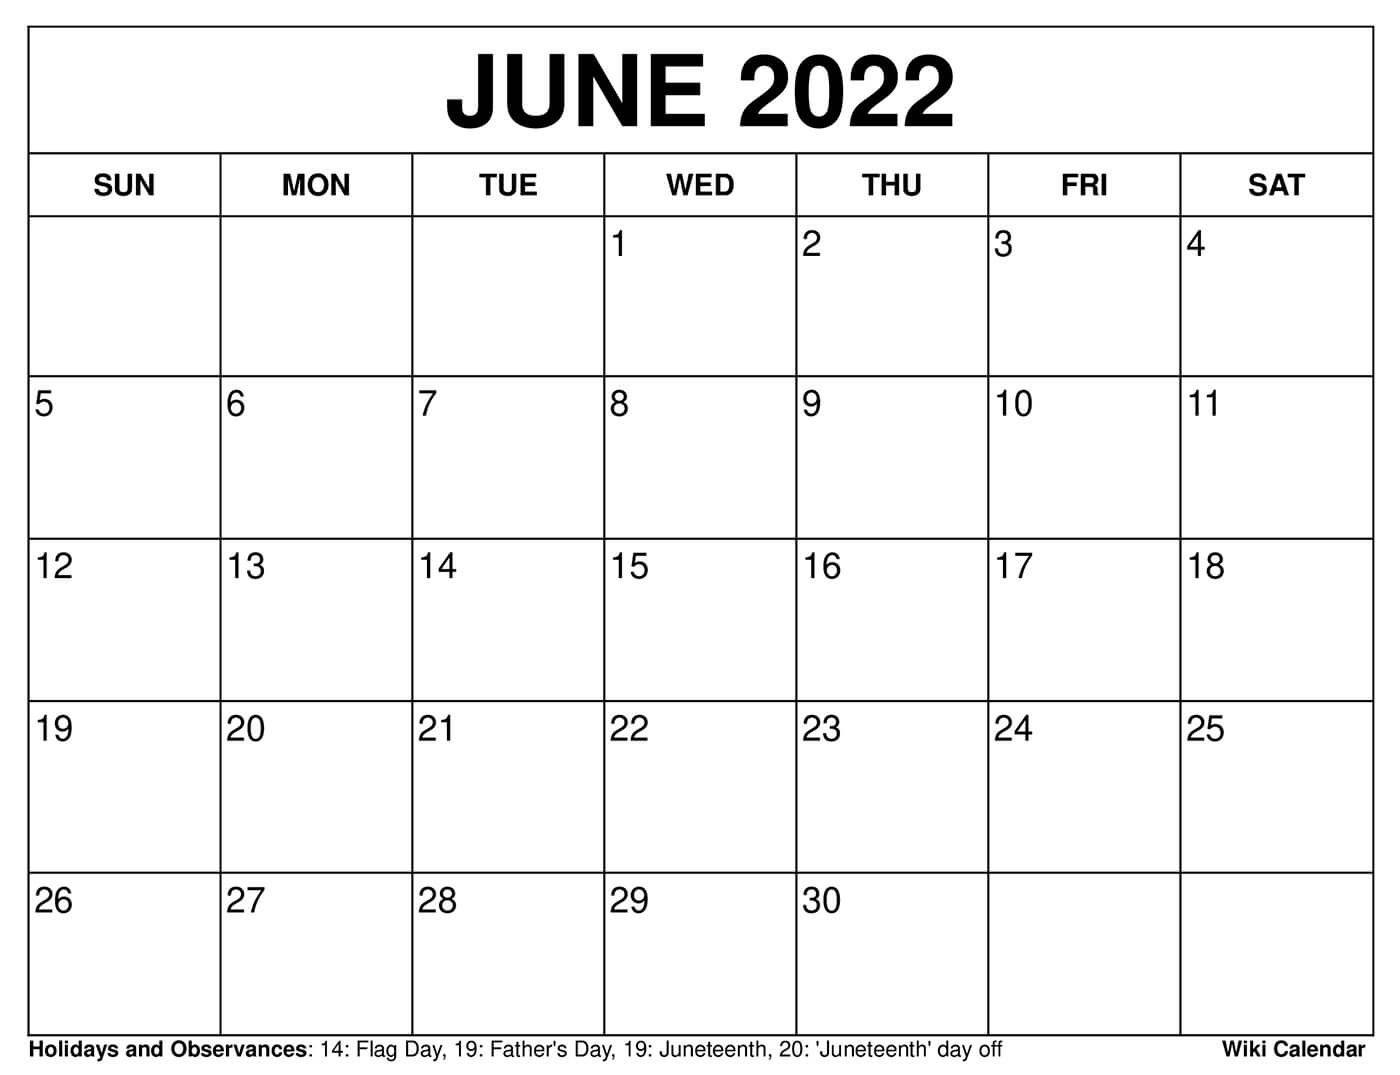 Free June 2022 Calendar Free Printable June 2022 Calendars - Wiki Calendar